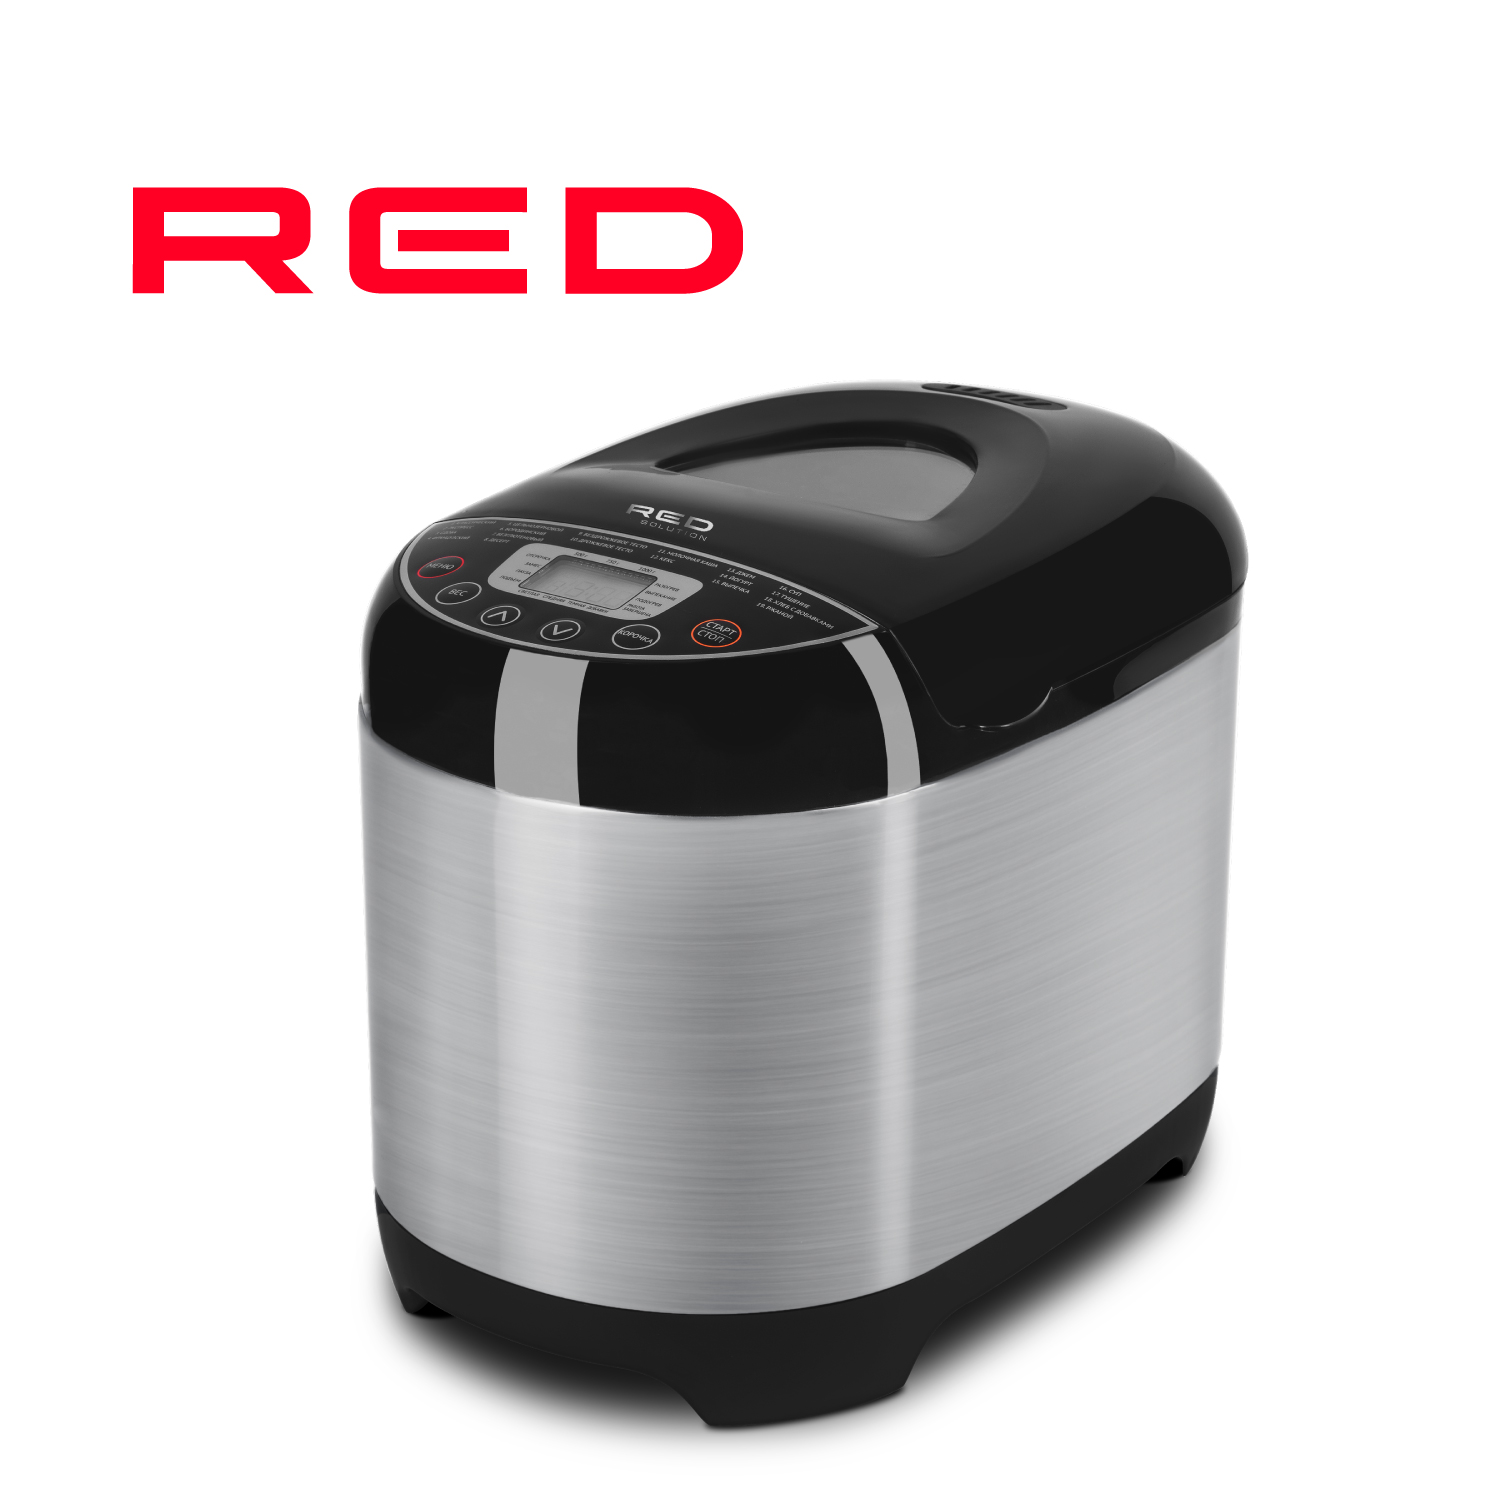 Хлебопечка RED SOLUTION RBM-M1911 серебристый, серый, черный соковыжималка шнековая red solution rj 912s 200 вт серый